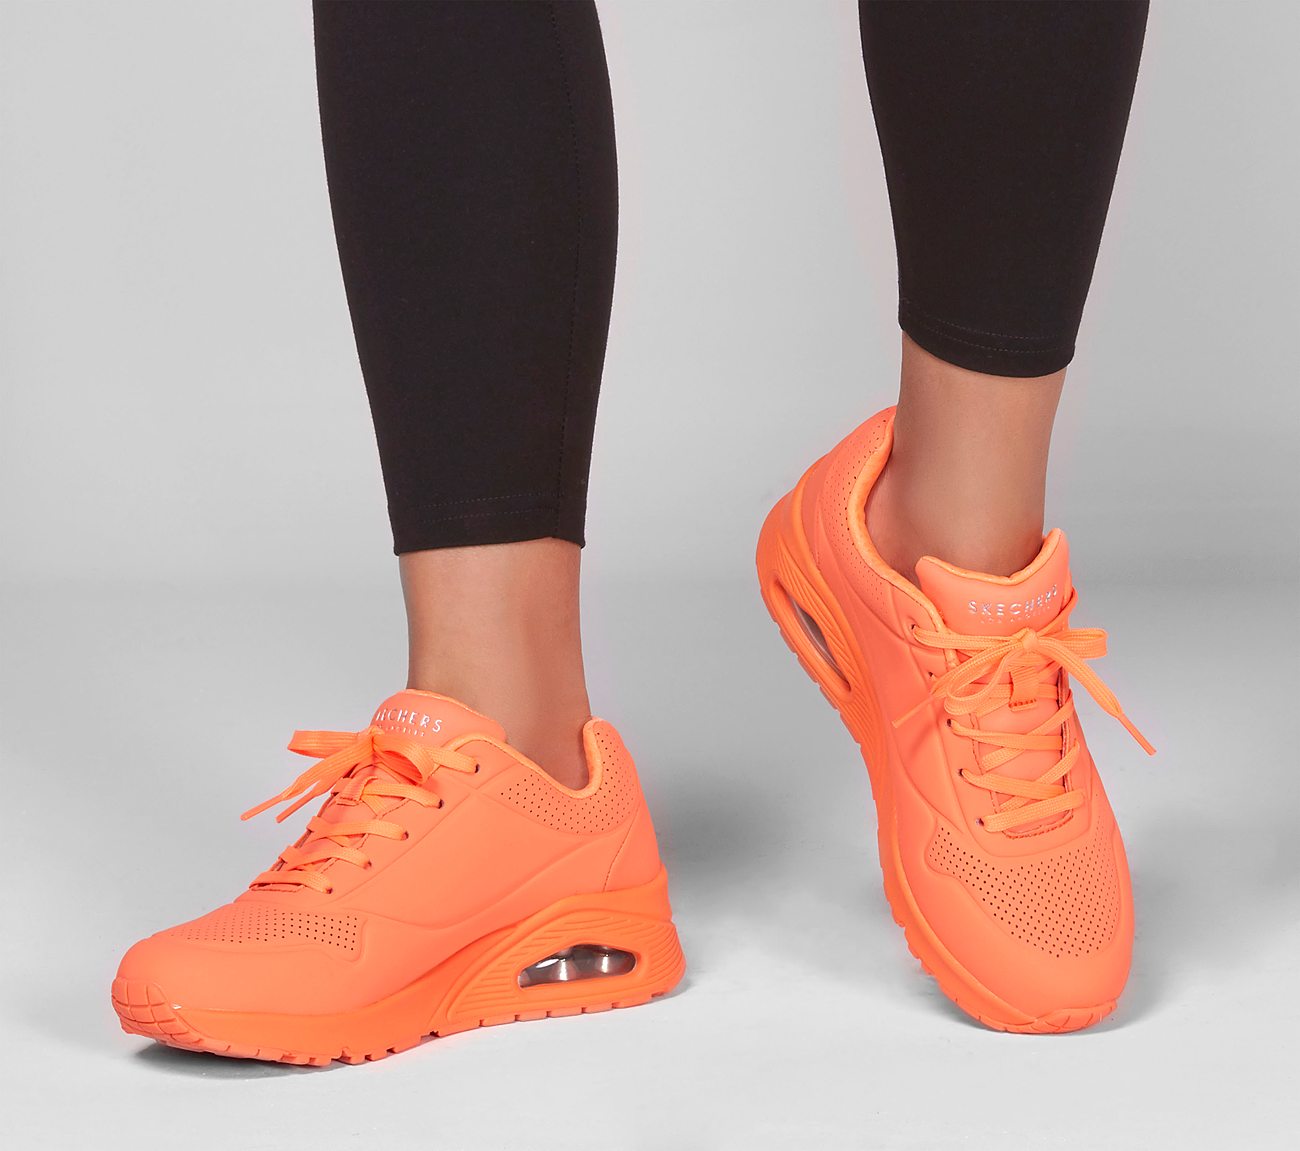 skechers orange shoes off 77% - online 